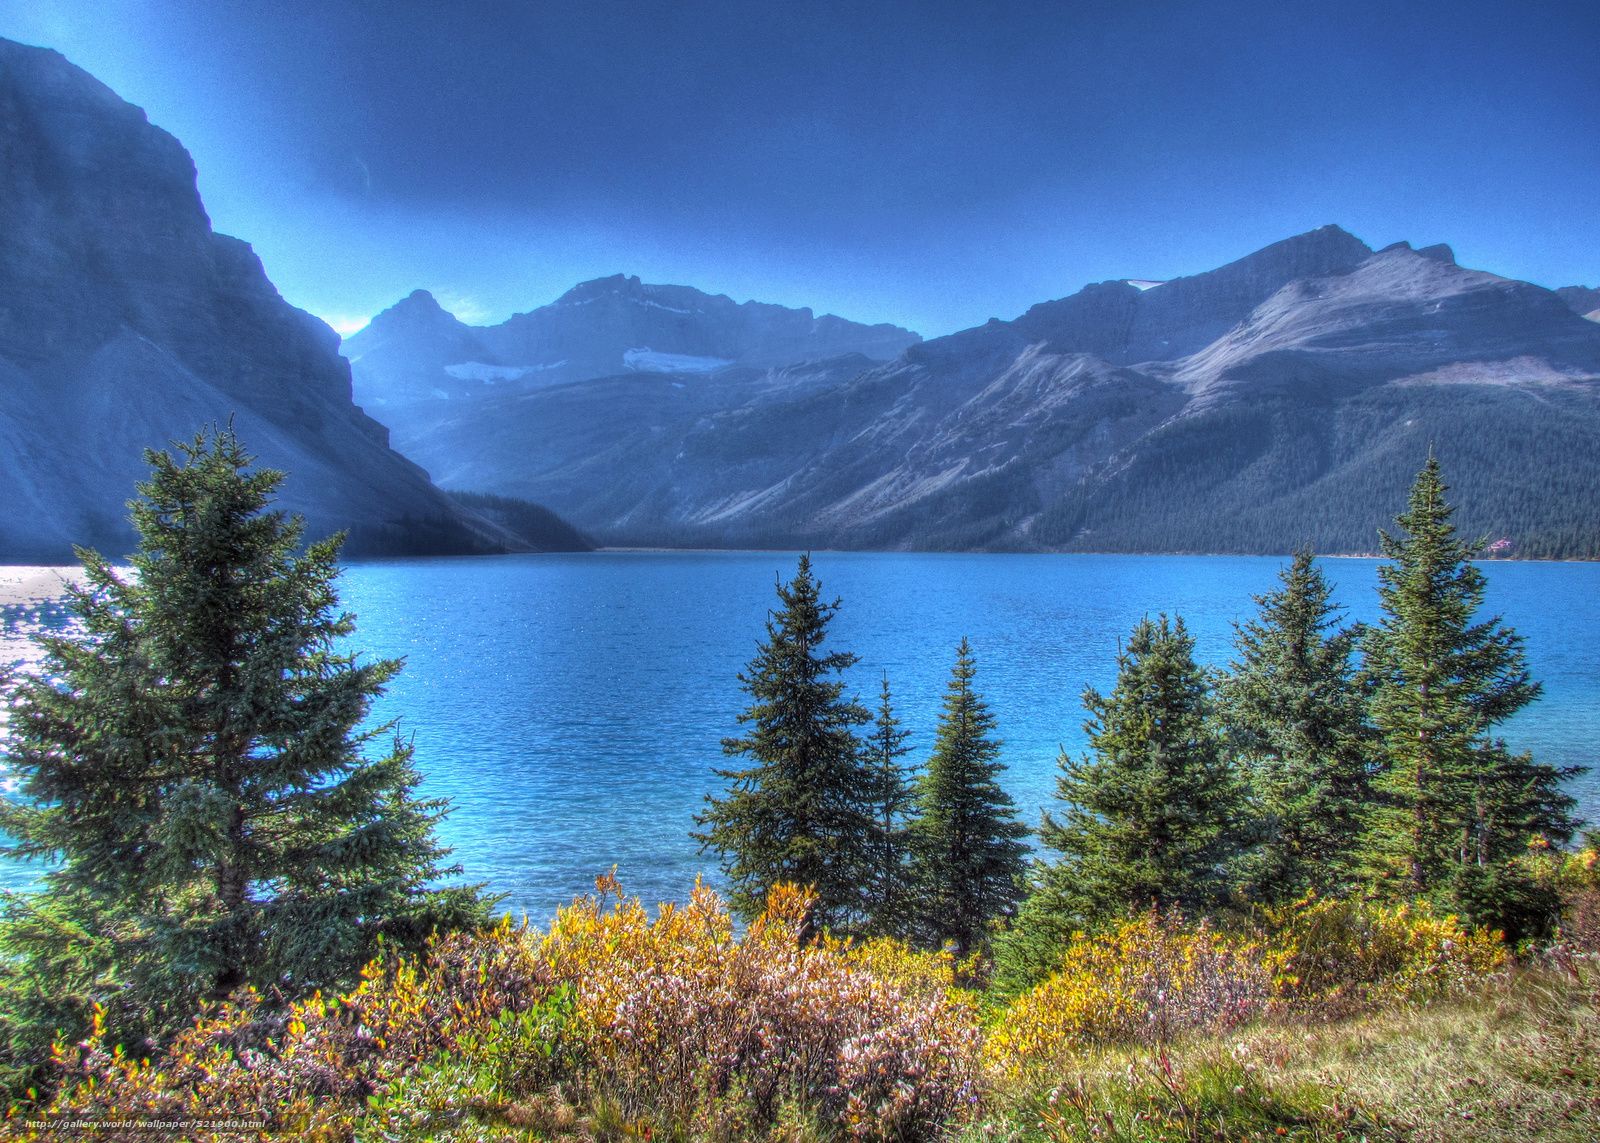 Download wallpaper bow lake, banff national park, alberta, canada free desktop wallpaper in the resolution 2048x1463